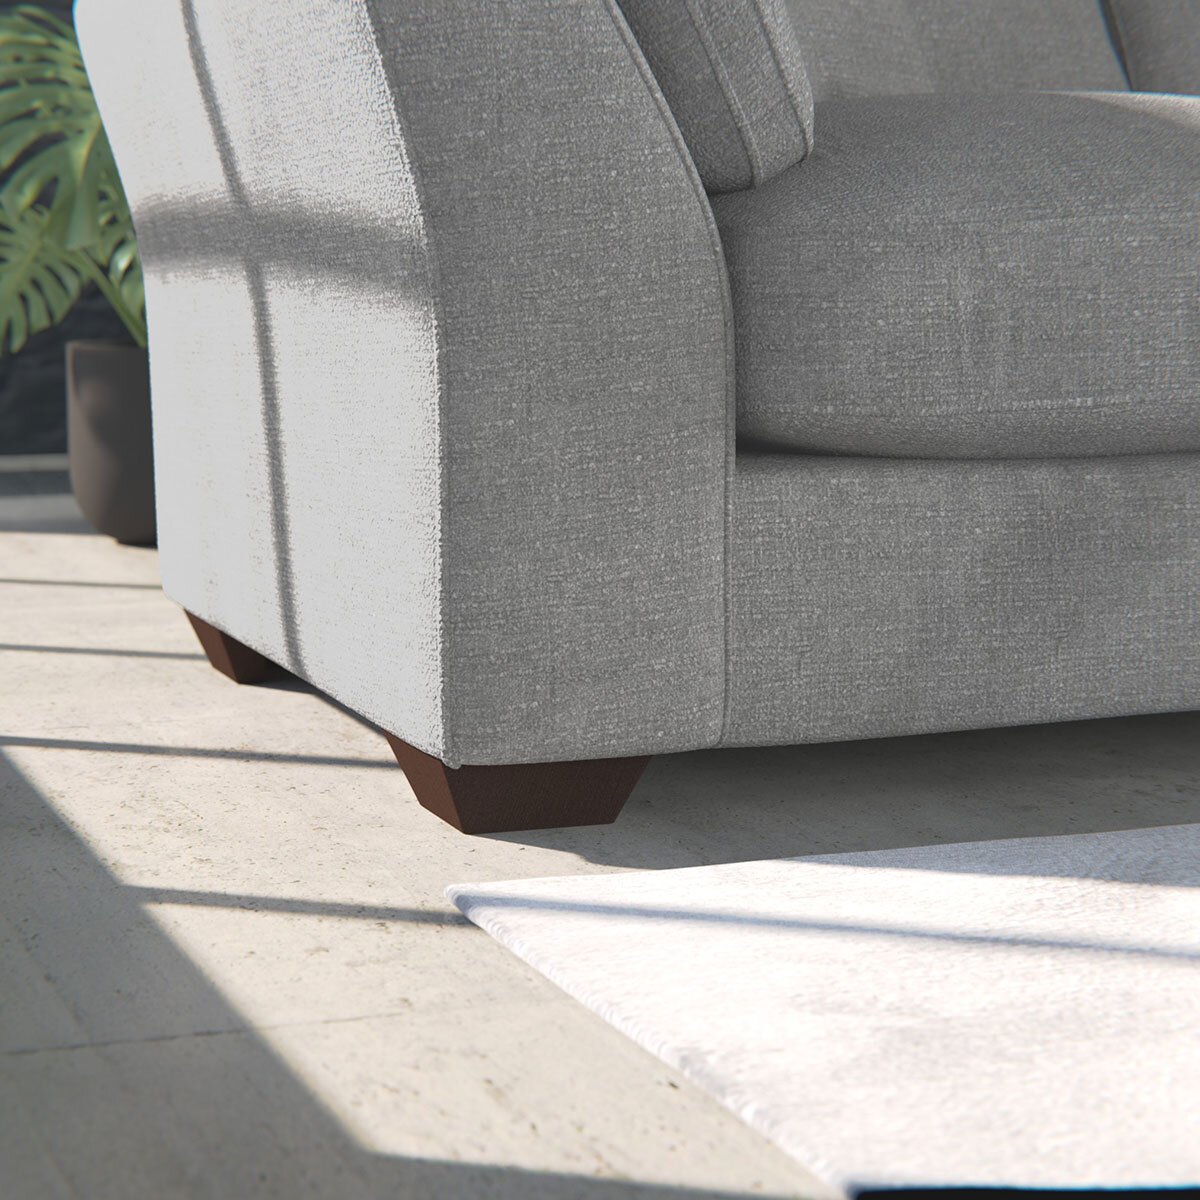 Selsey Grey Fabric 4 Seater Split Sofa